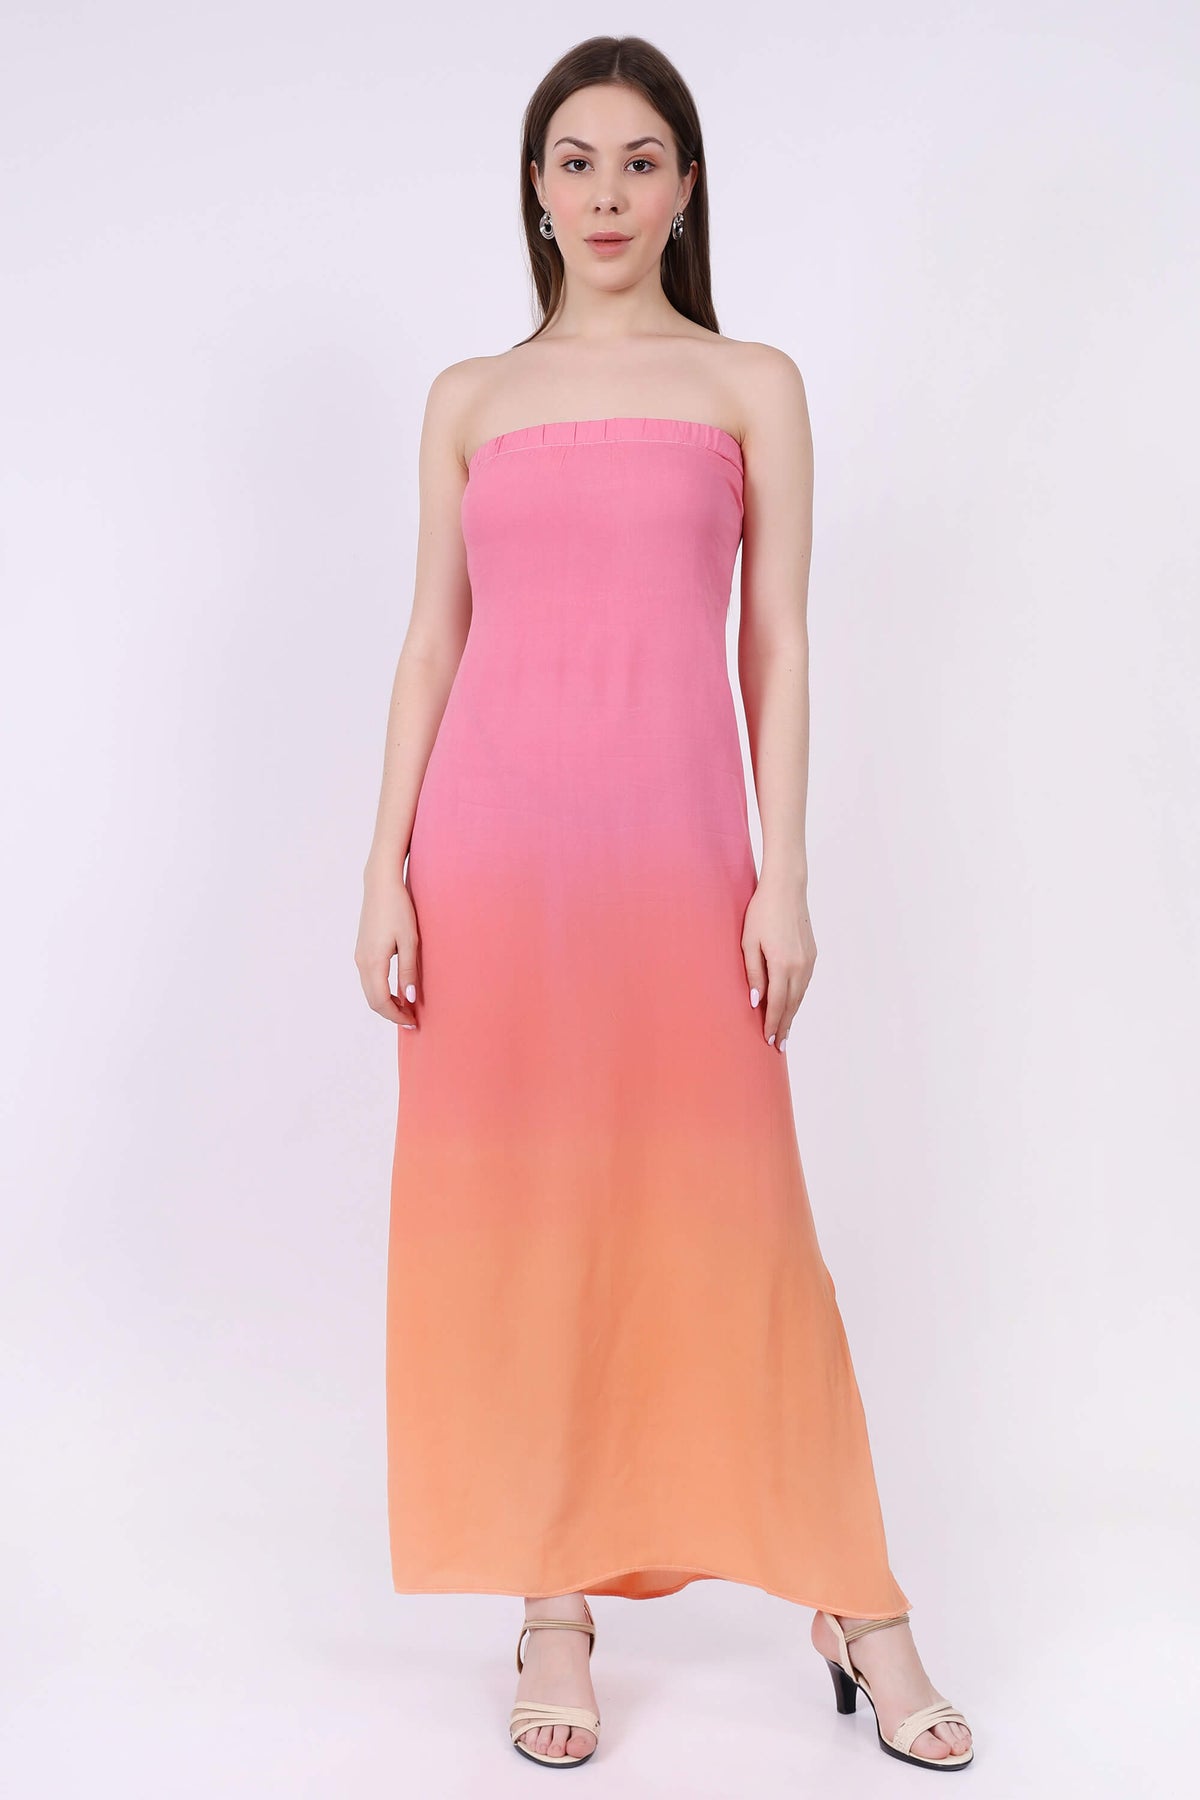 Colorful Sleeveless Long Dress